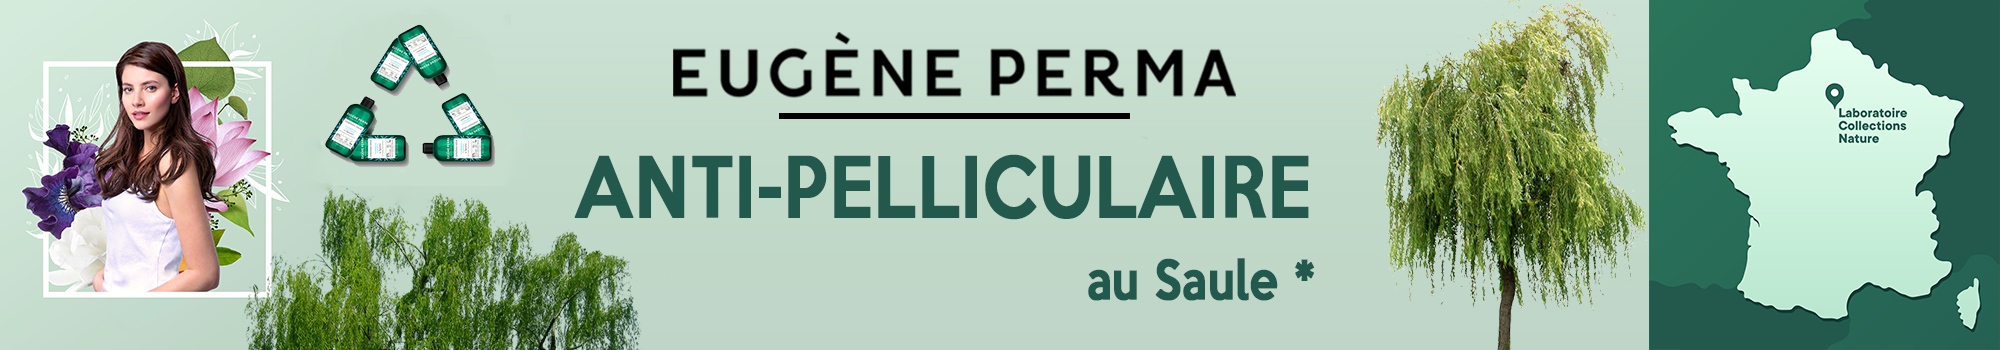 Collections Nature Anti-Pelliculaire Eugène Perma